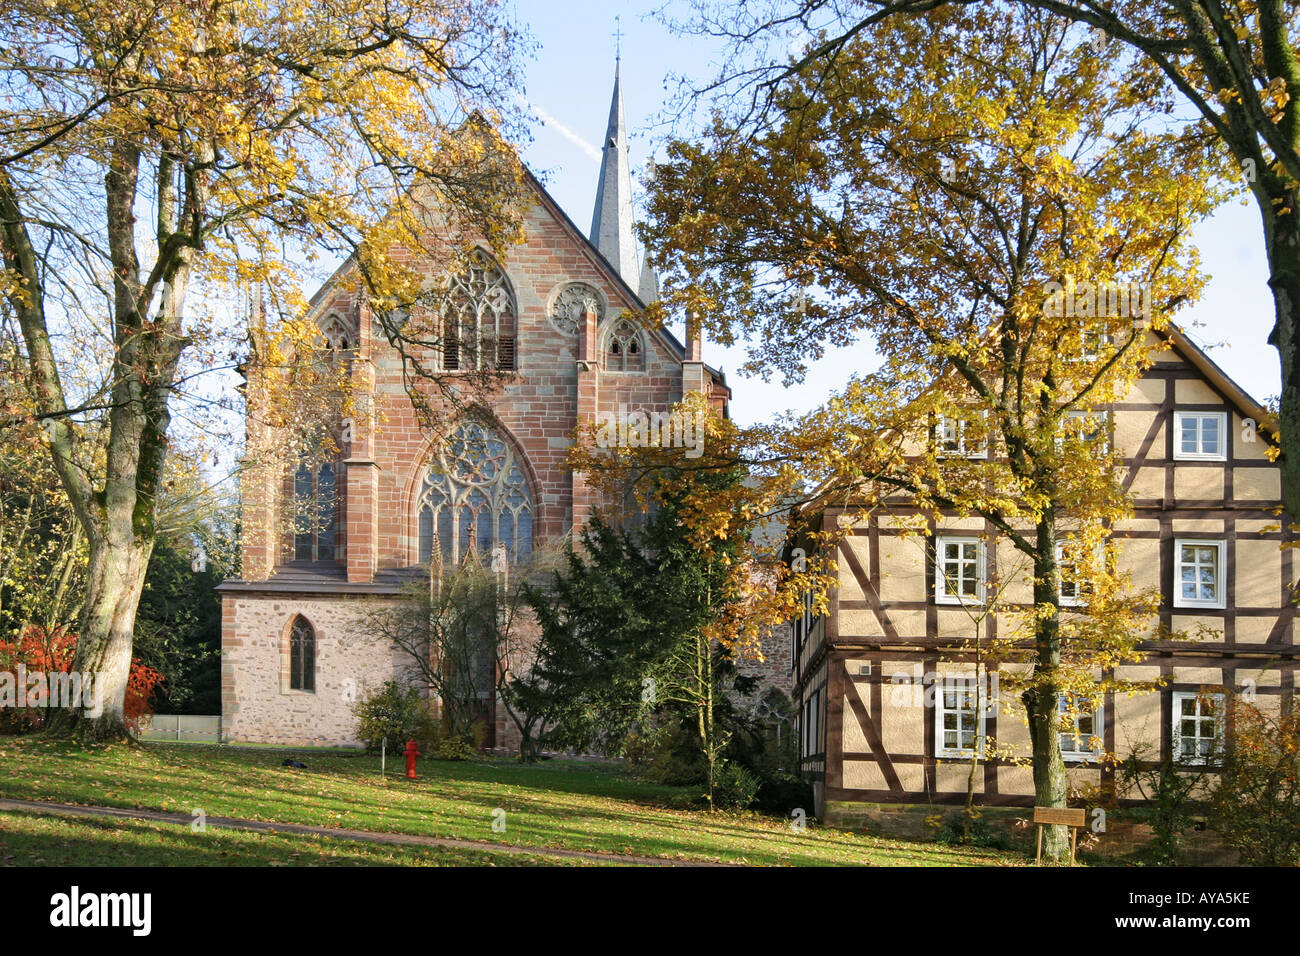 Monastery-church of Haina, Hesse, Germany Stock Photo - Alamy